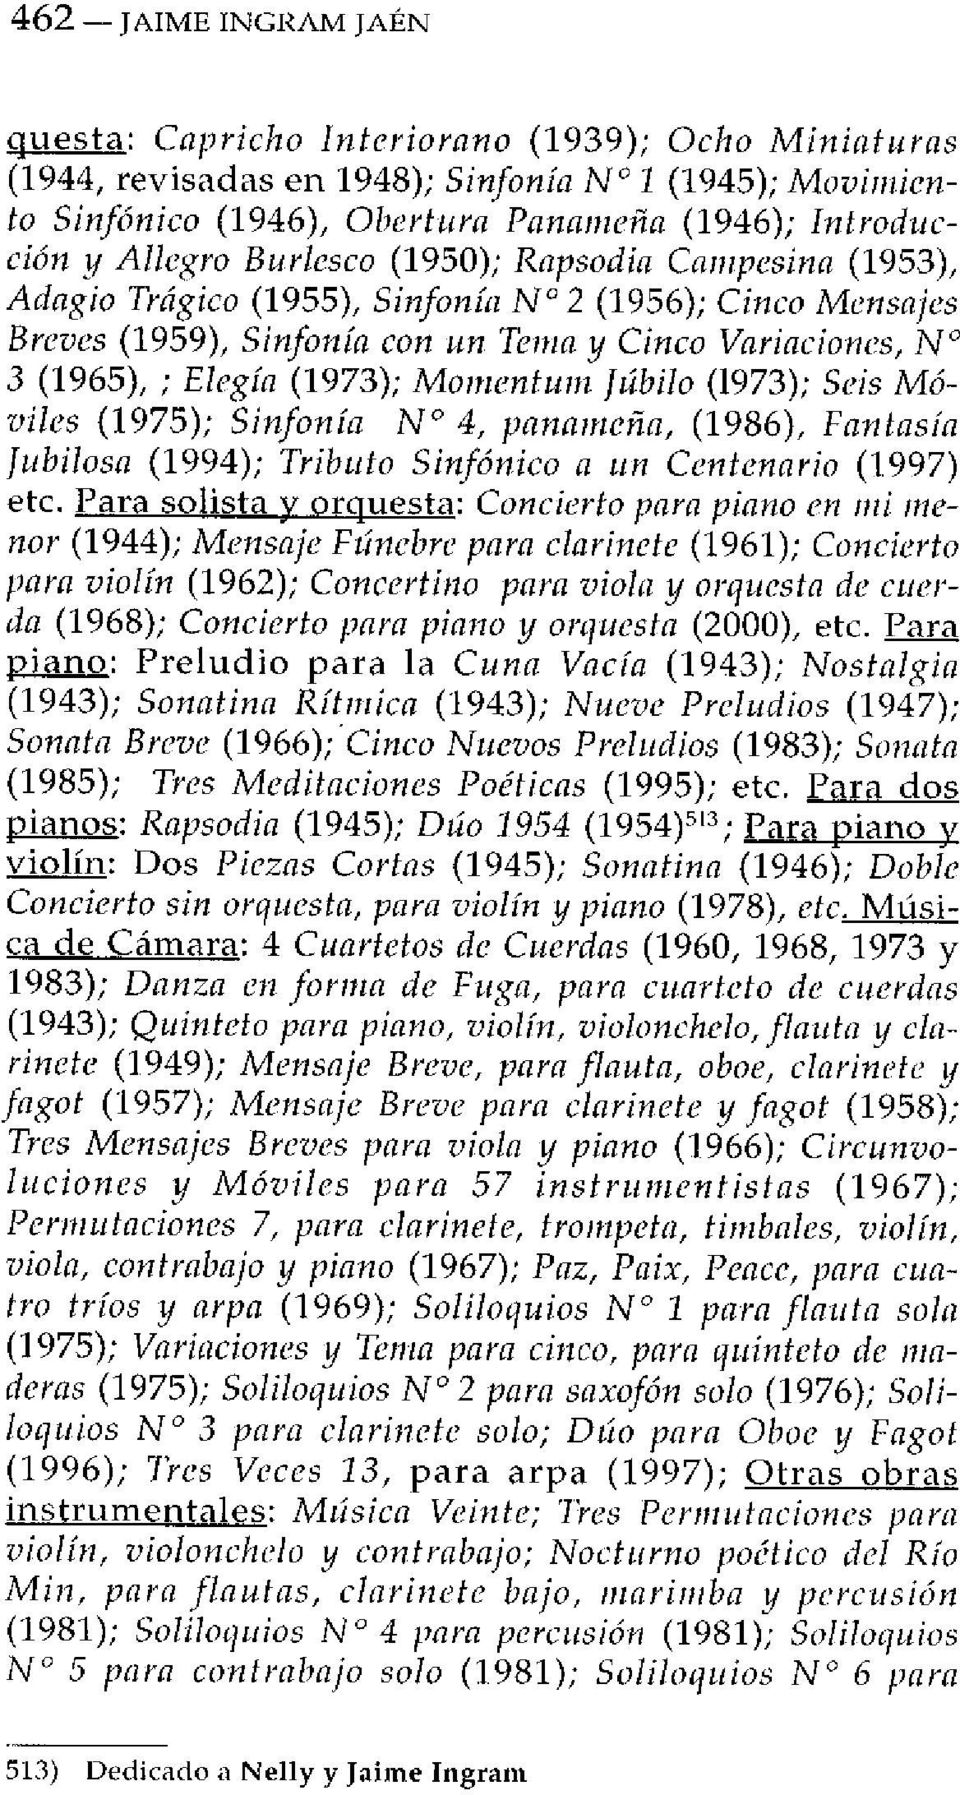 Momentum Júbilo (1973) ; Seis Móviles (1975) ; Sinfonía N 4, panameña, (1986), Fantasía Jubilosa (1994) ; Tributo Sinfónico a un Centenario (1997) etc.